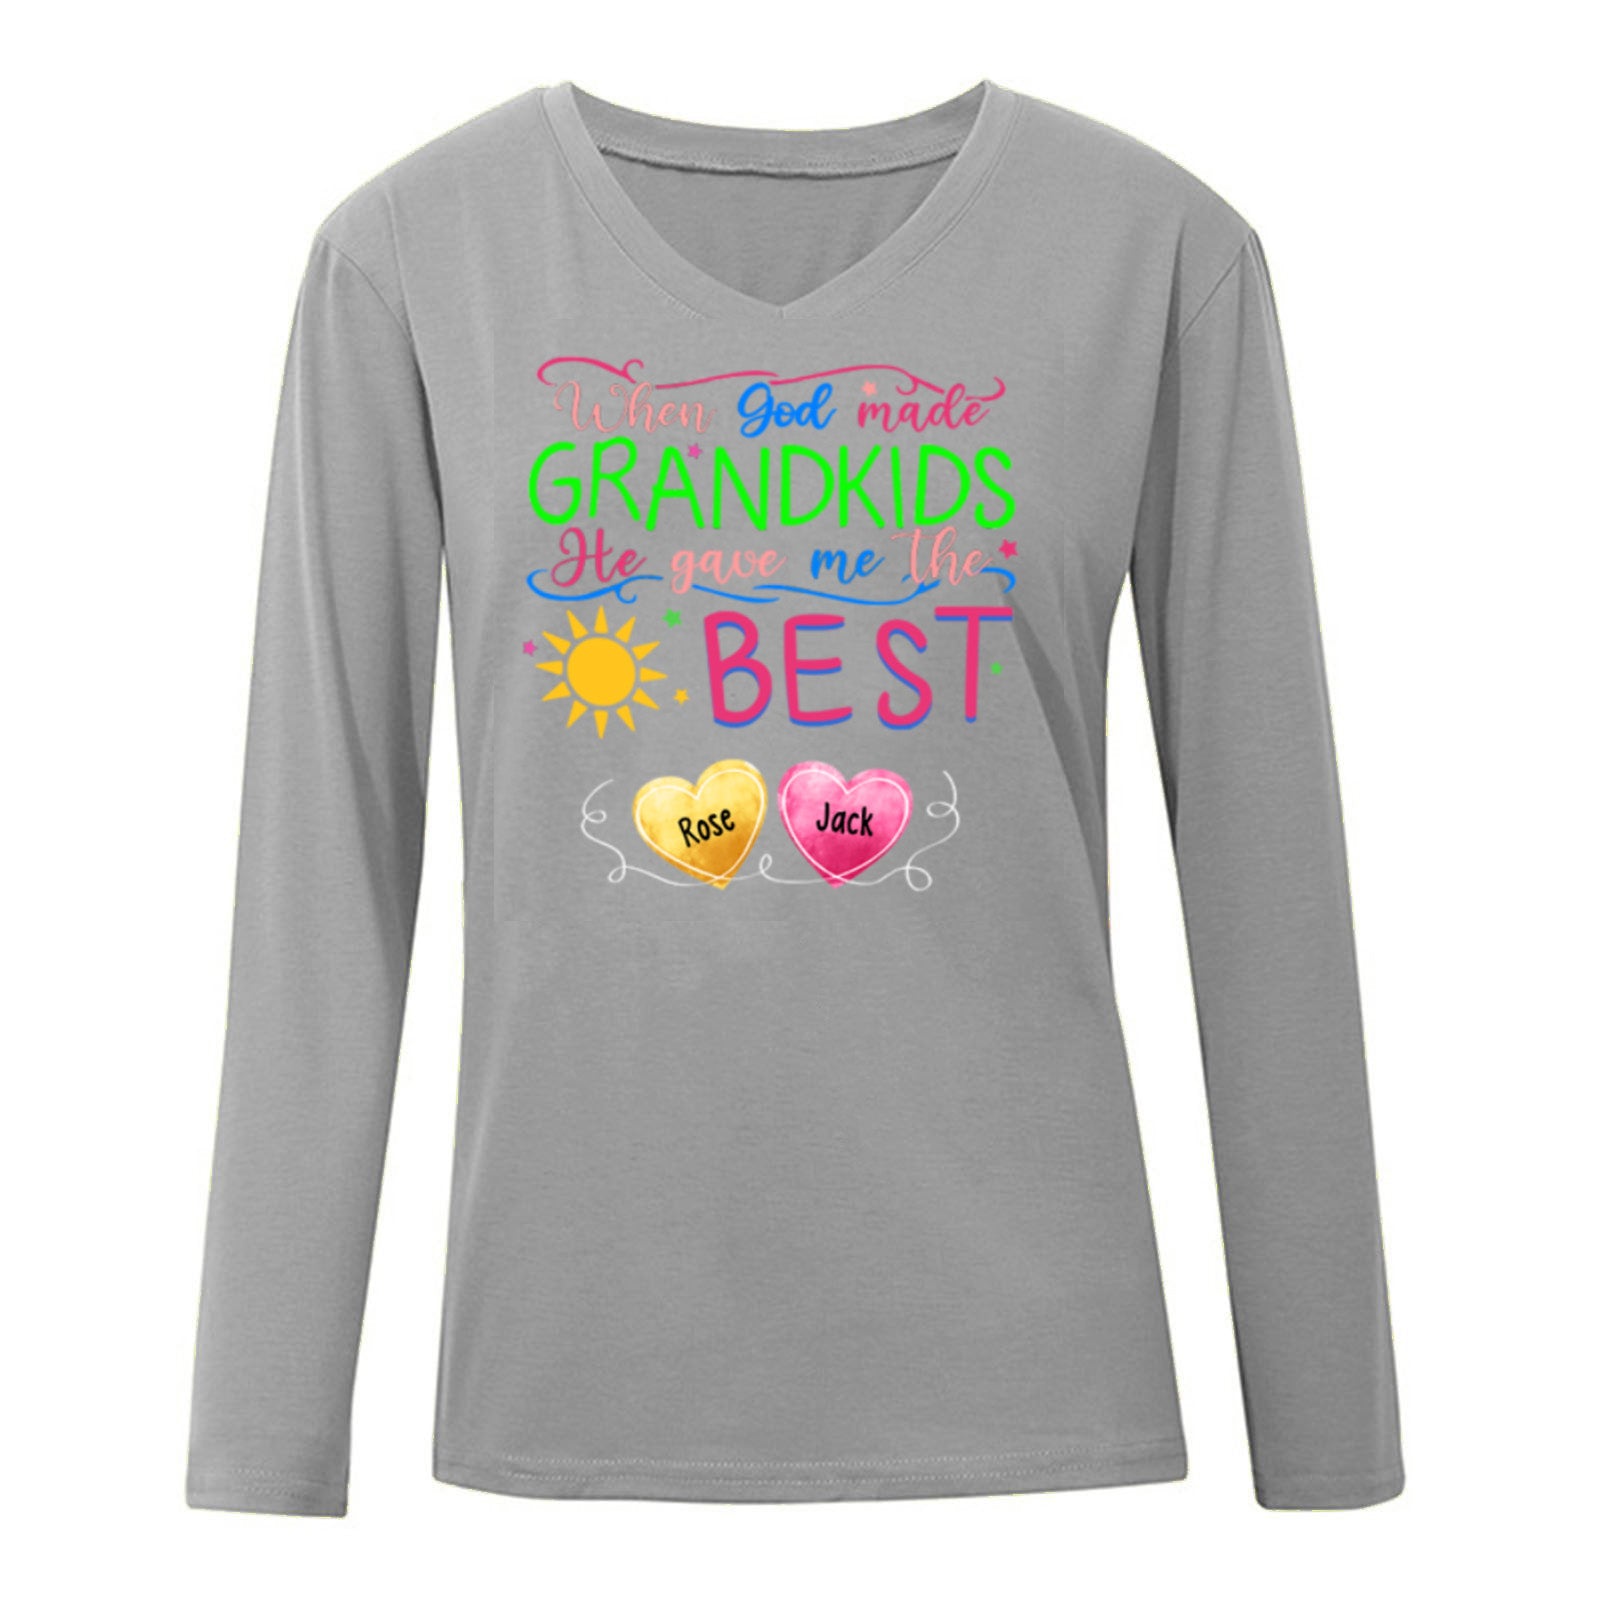 God Gave Me The Best When Made Grandkids Grandma Grandpa Personalized Long Sleeve Shirt